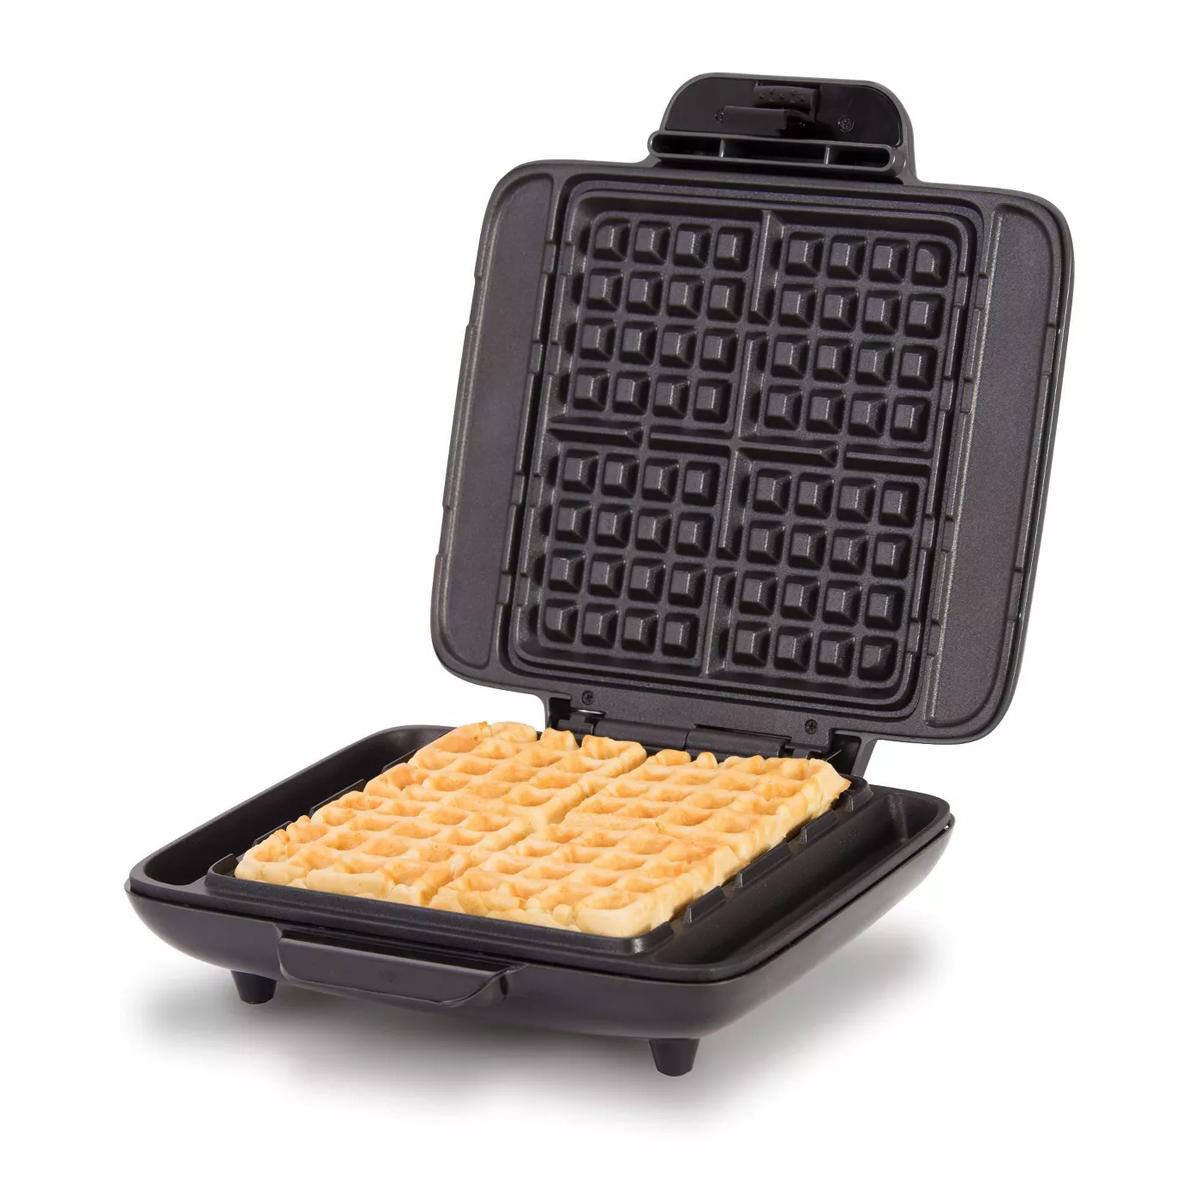 Dash No-Drip Waffle Maker for $19.99